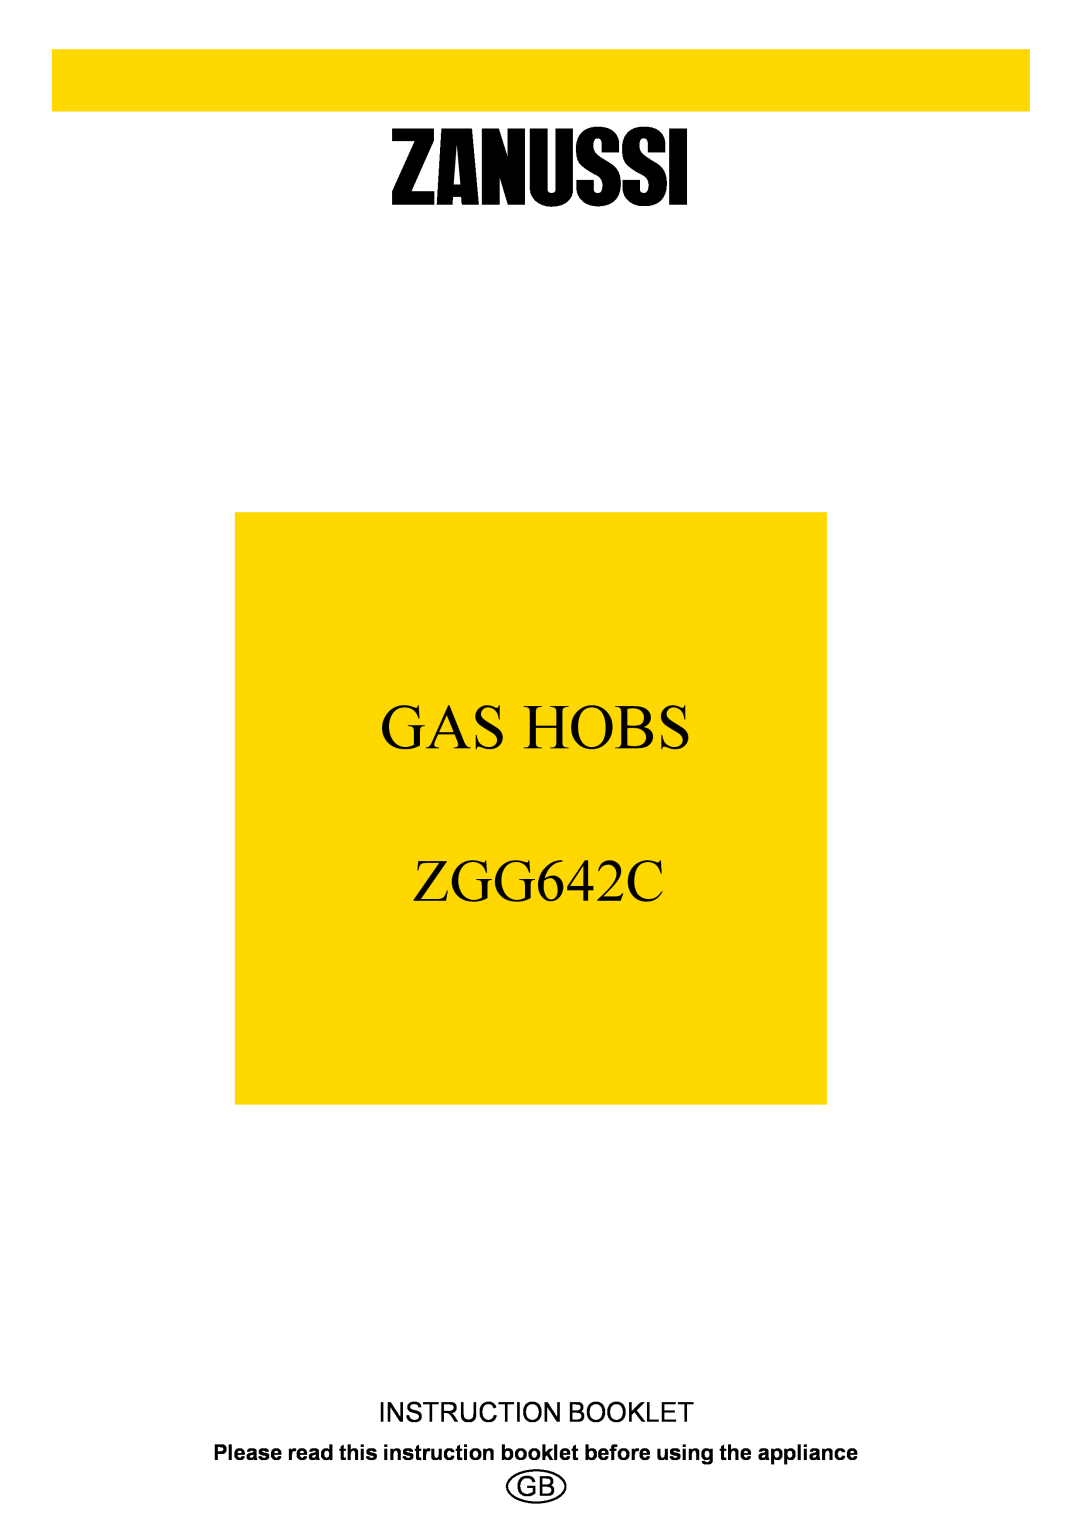 Zanussi ZGG642C manual Gas Hobs, Instruction Booklet 